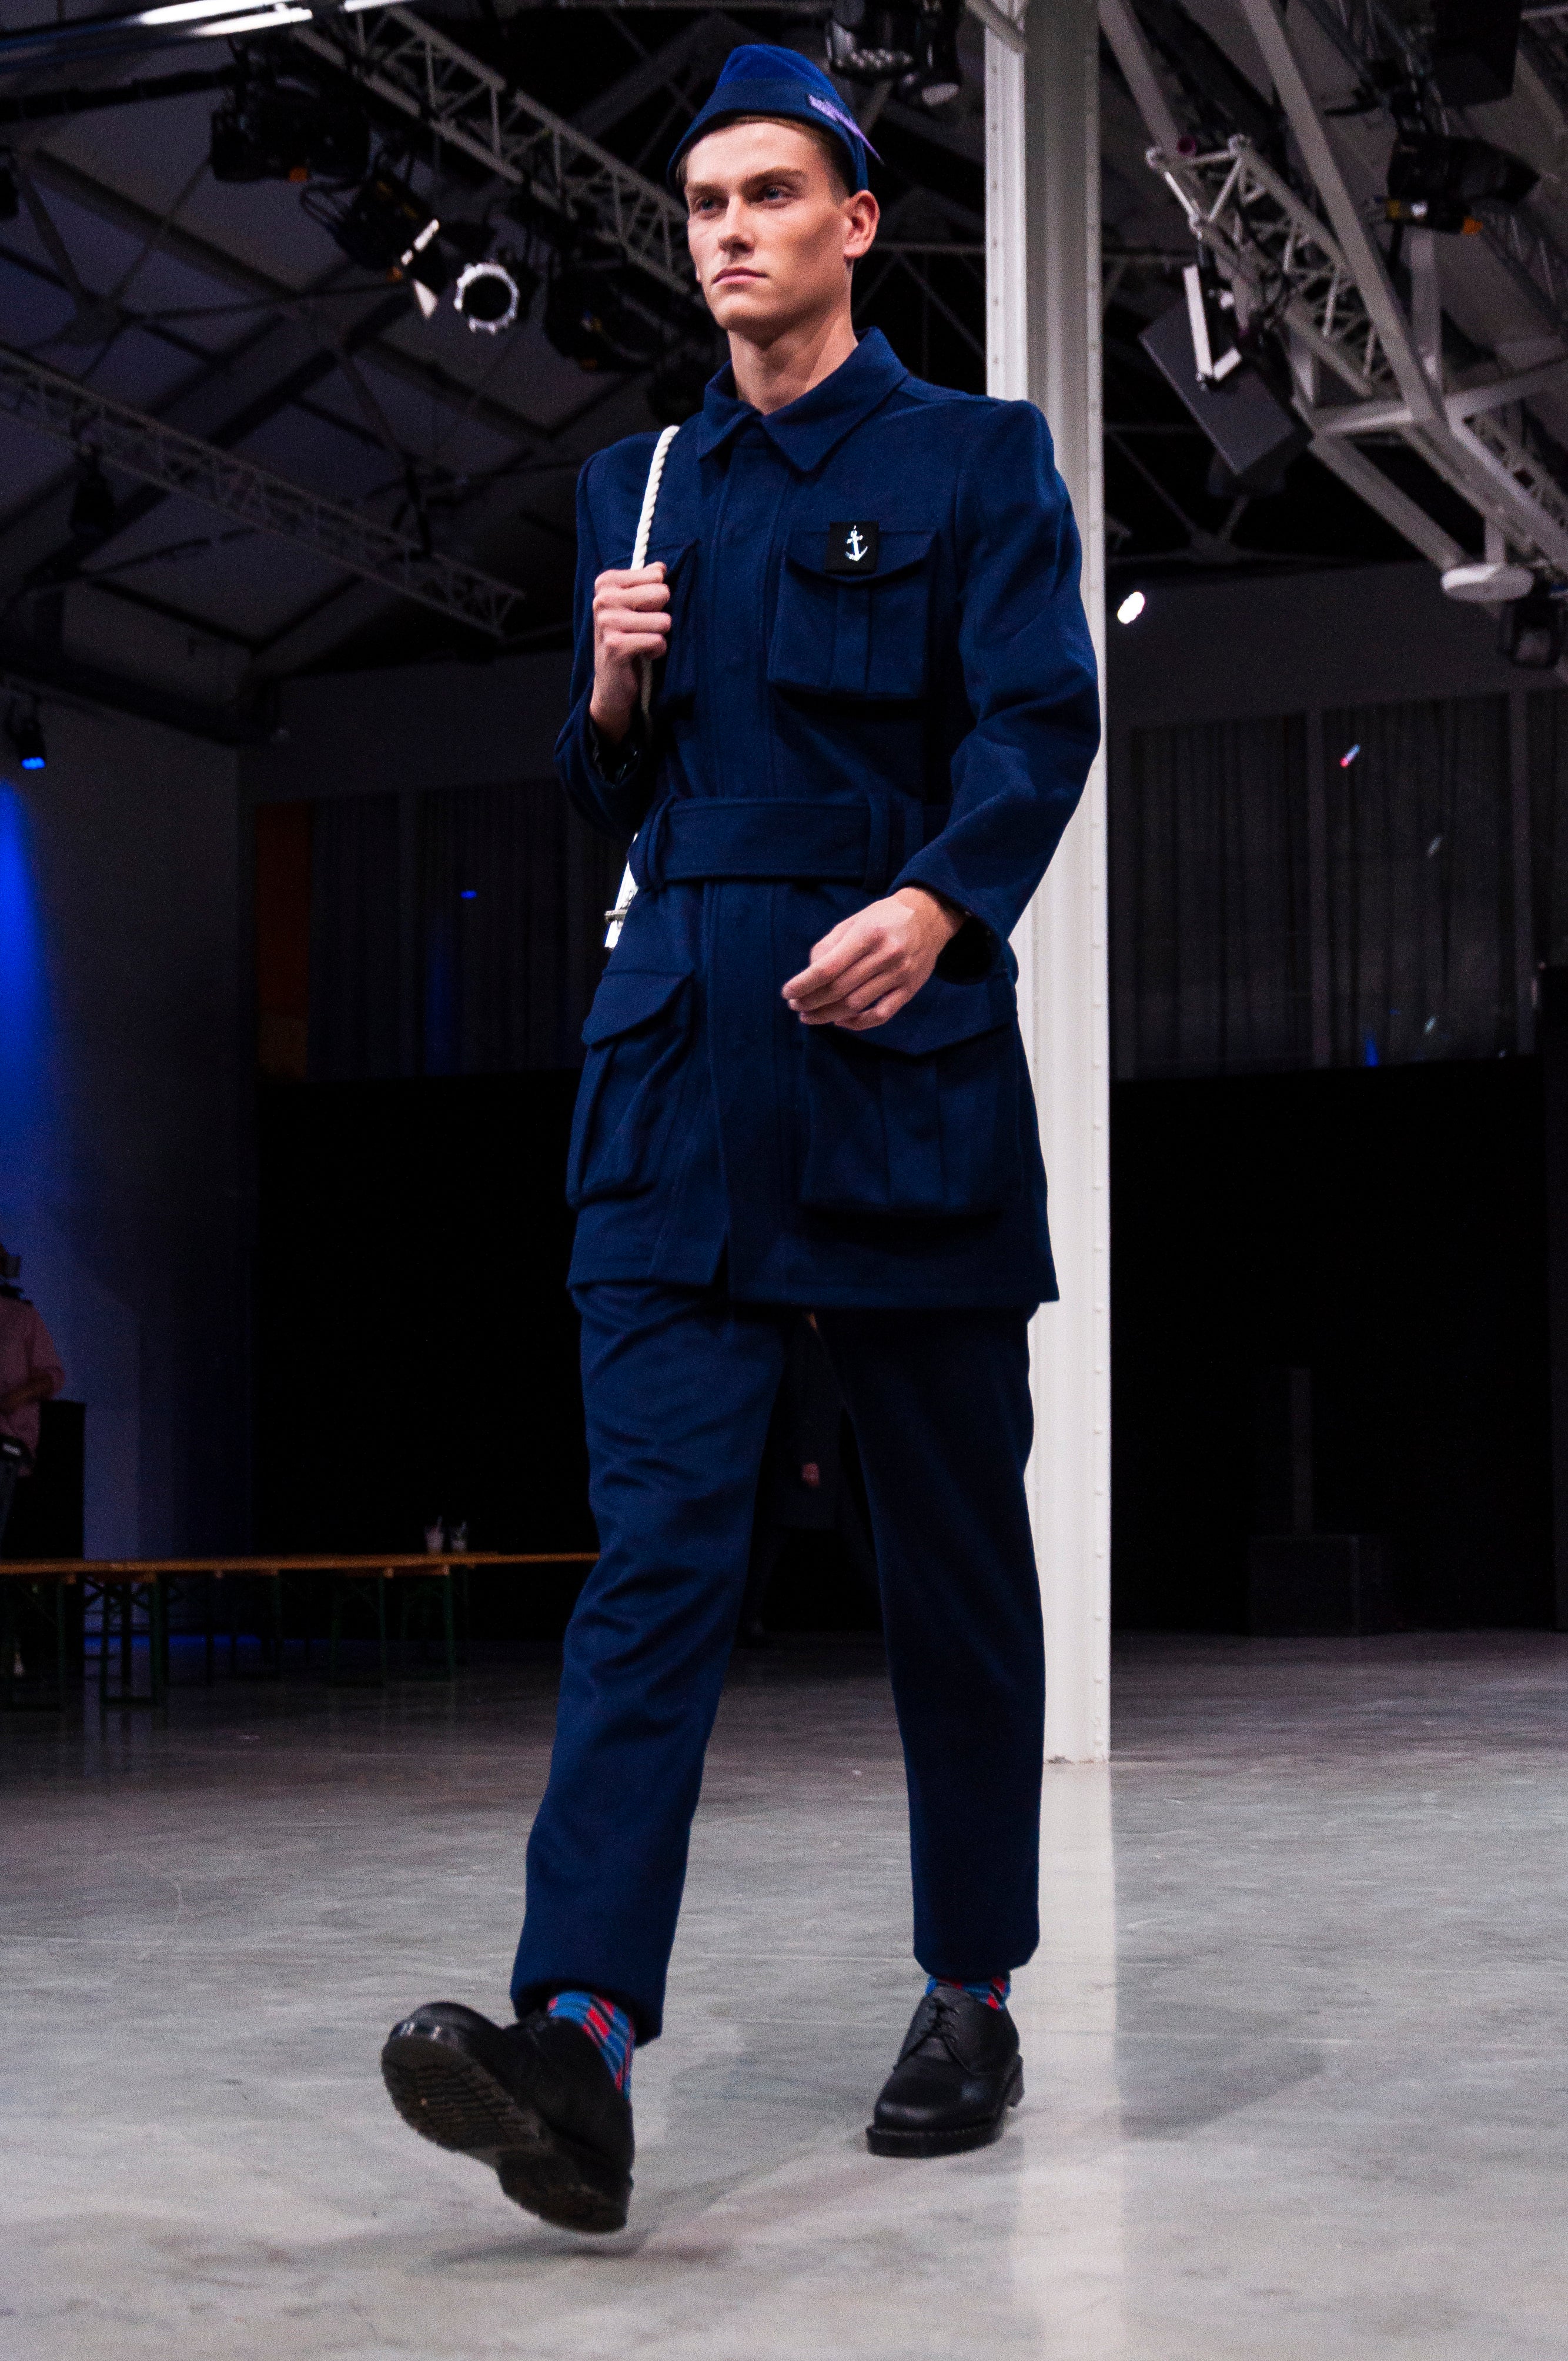 stillsveta unisex cashmere suit - jacket and trousers